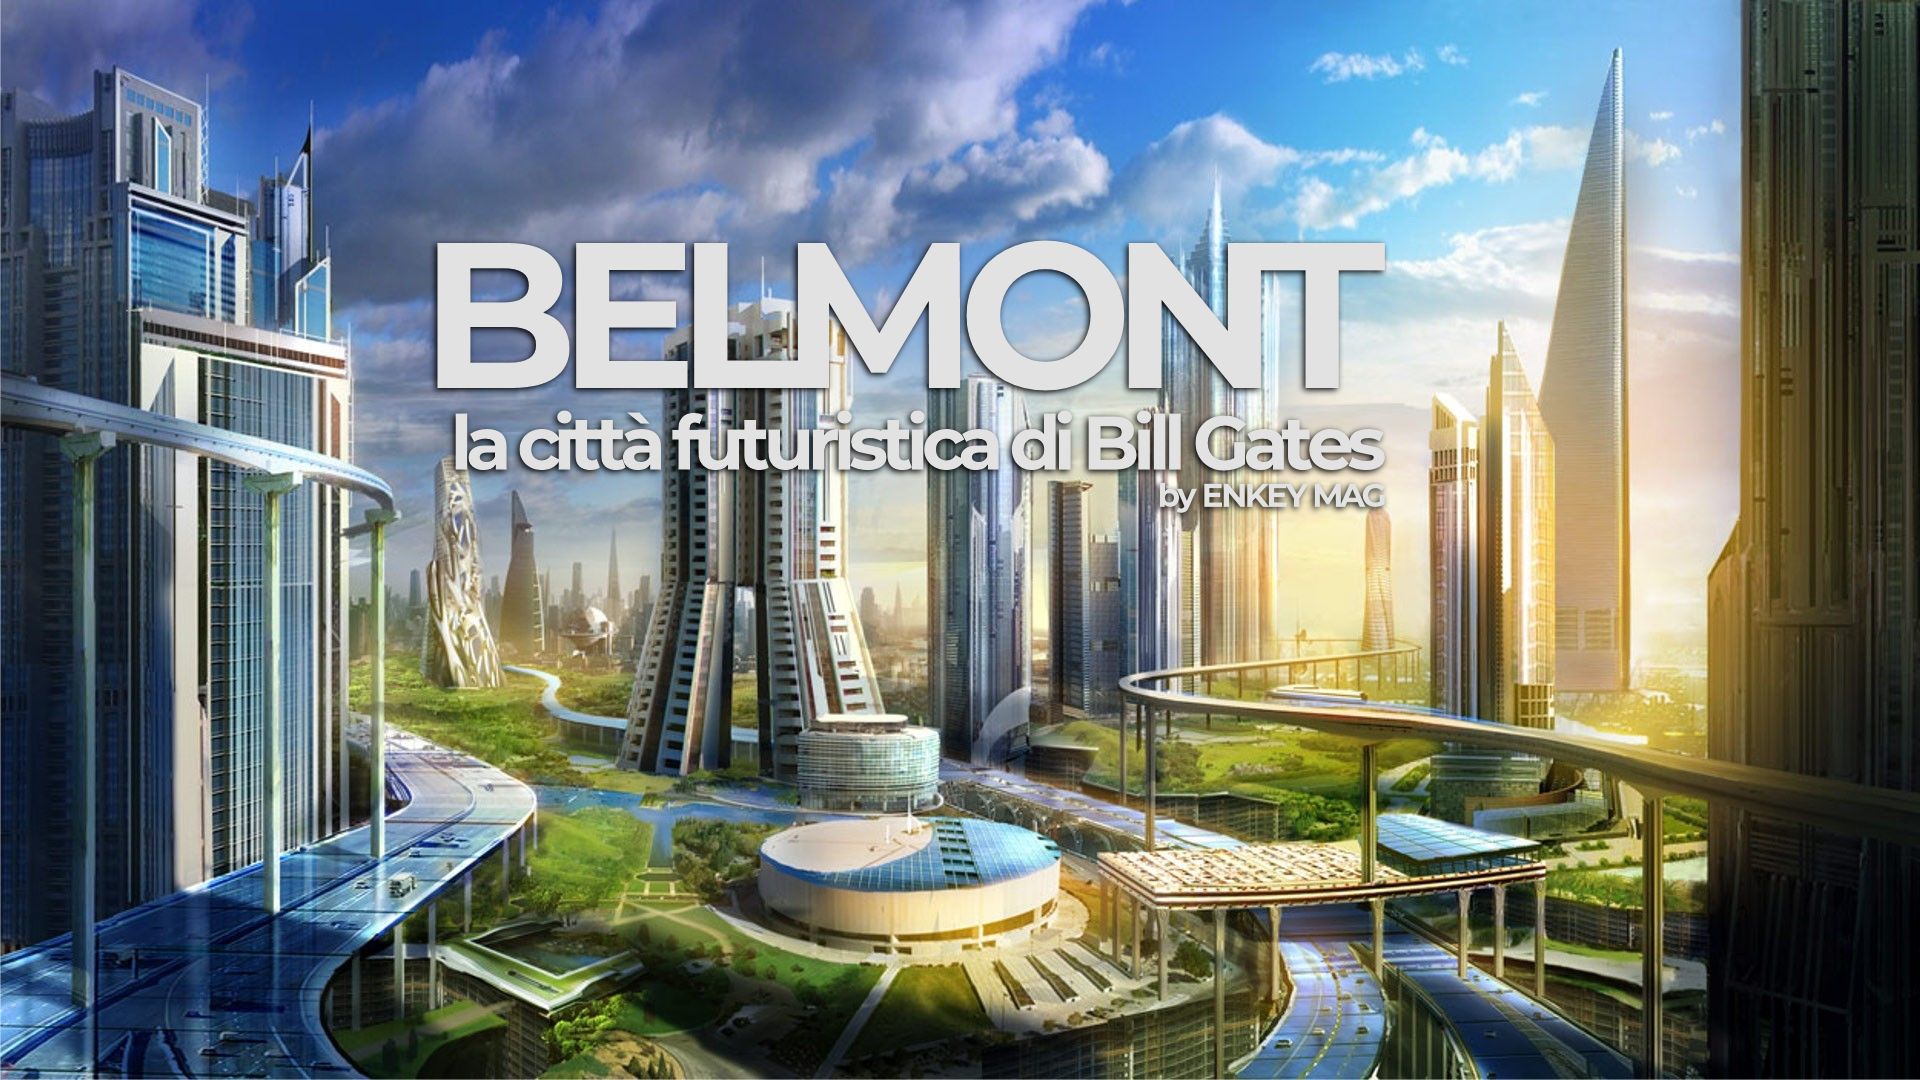 Belmont - la città futuristica di Bill Gates